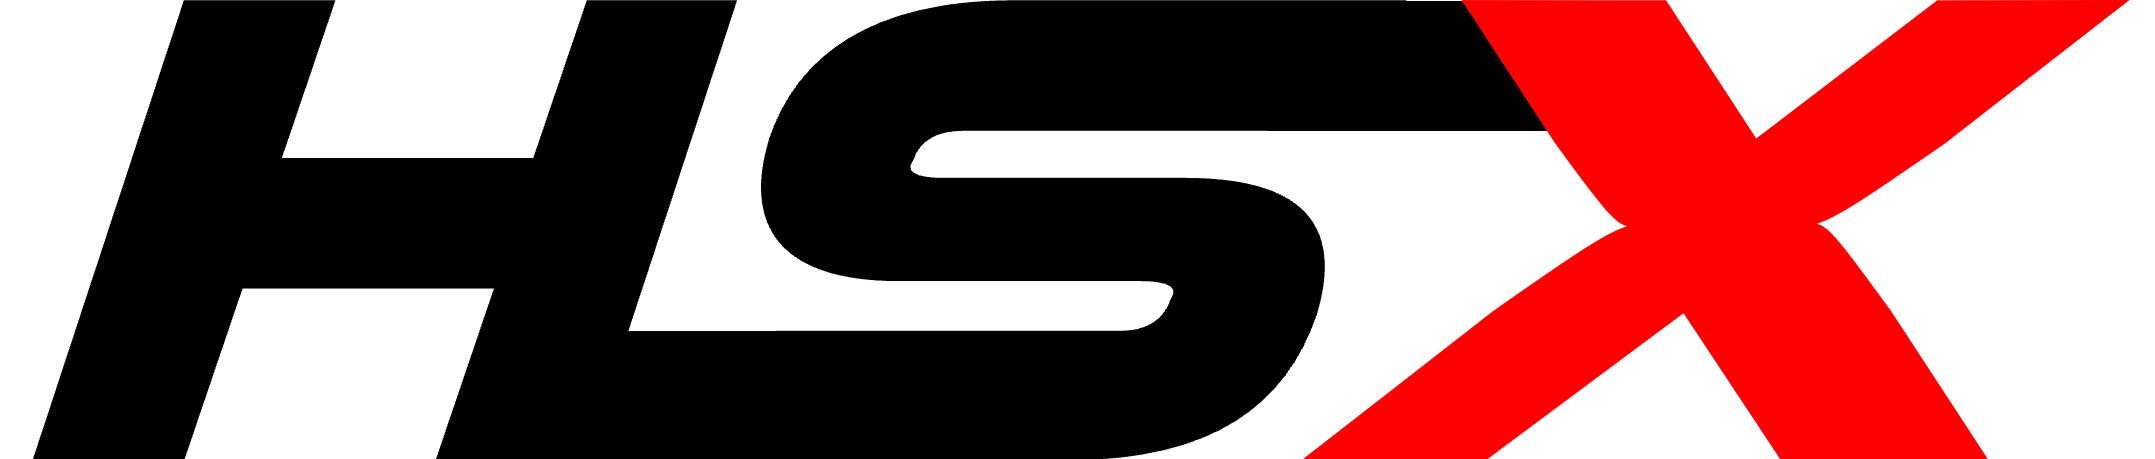 HyperSpotX Logo